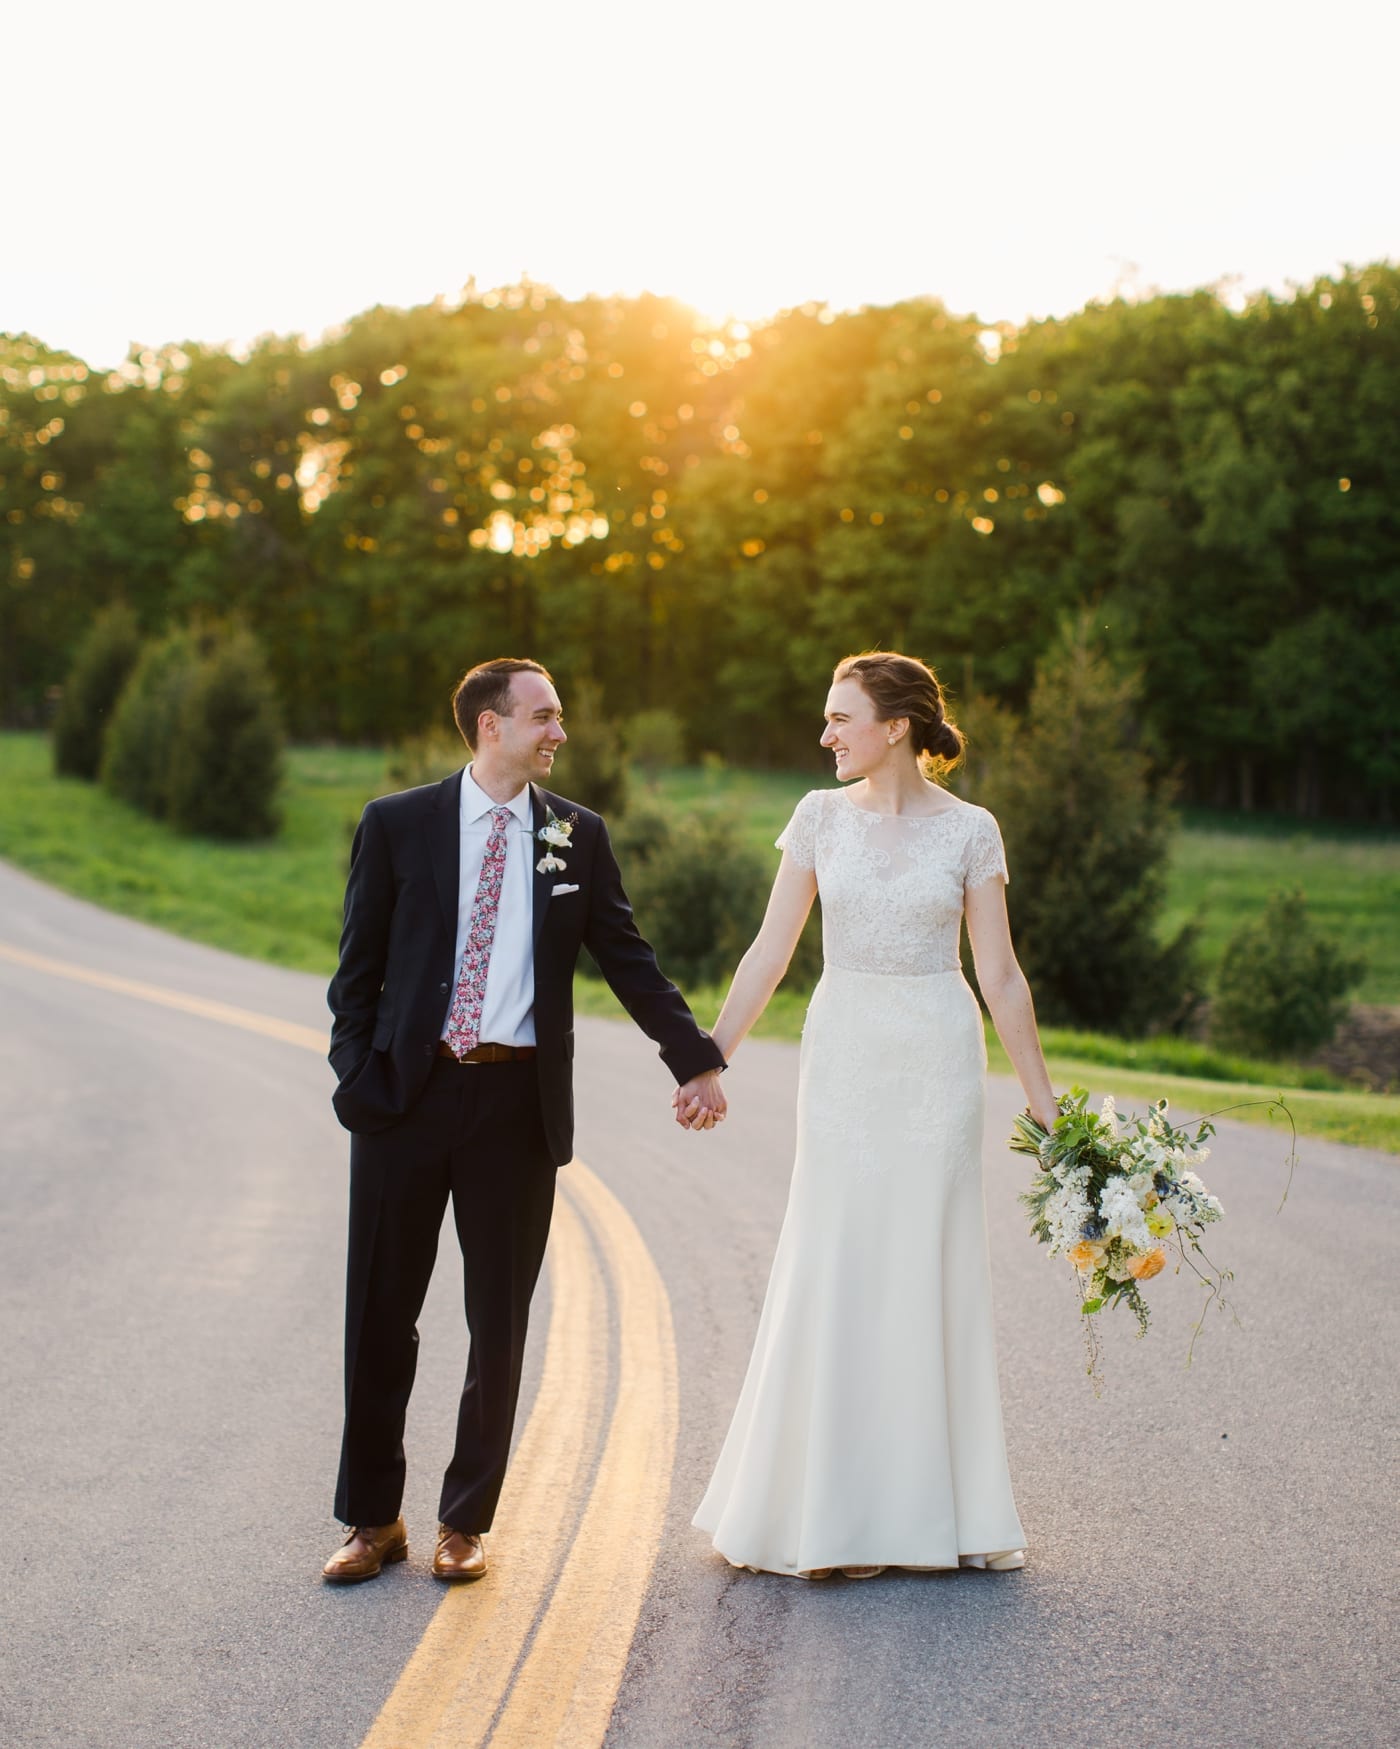 Eilidh and Jack | An Intimate Backyard Wedding in Batavia, New York